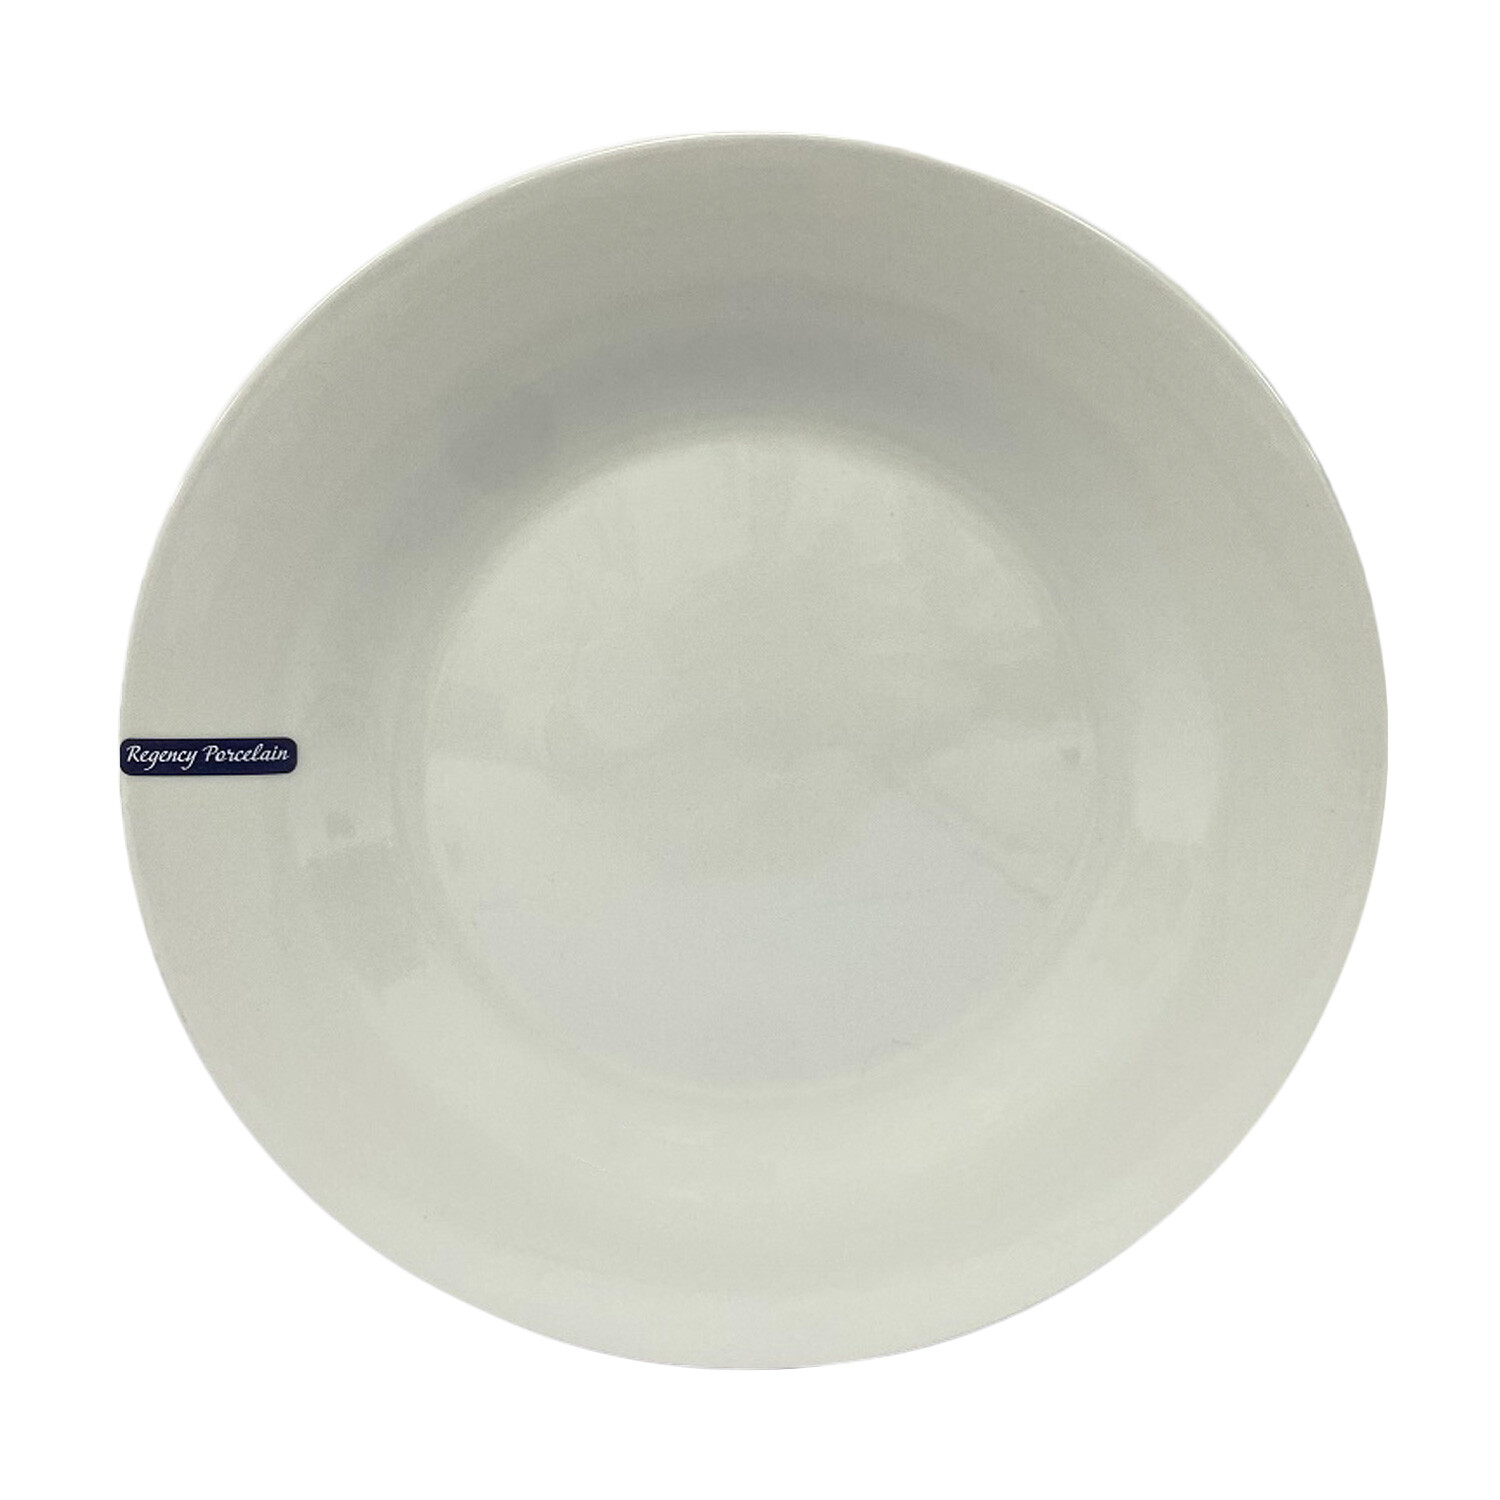 Regency Porcelain Side Plate - White Image